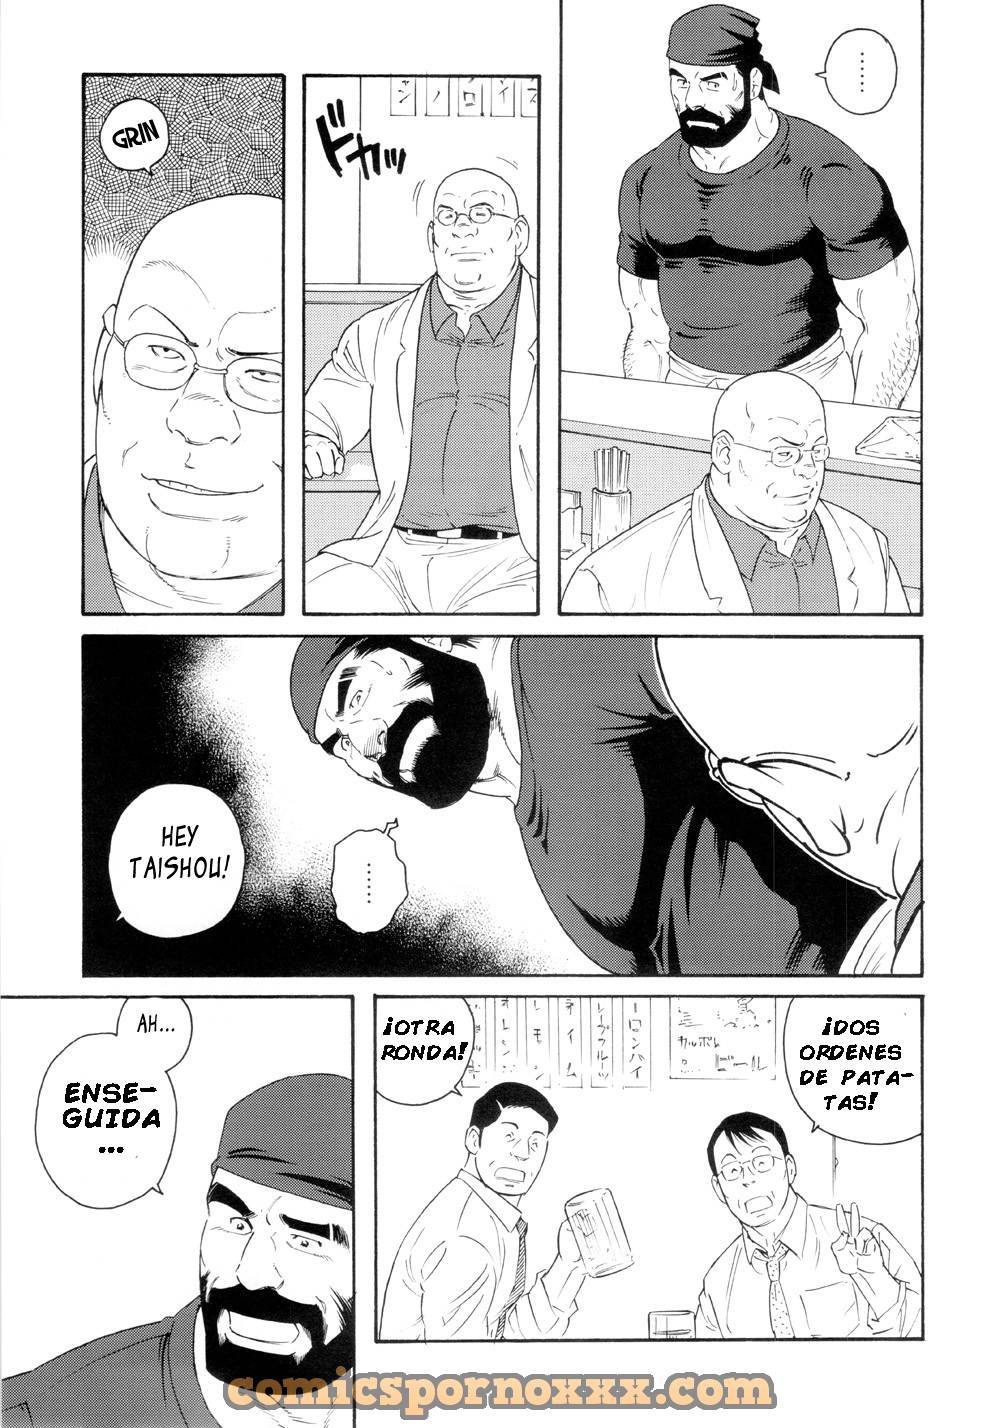 El Contrato - 5 - Comics Porno - Hentai Manga - Cartoon XXX